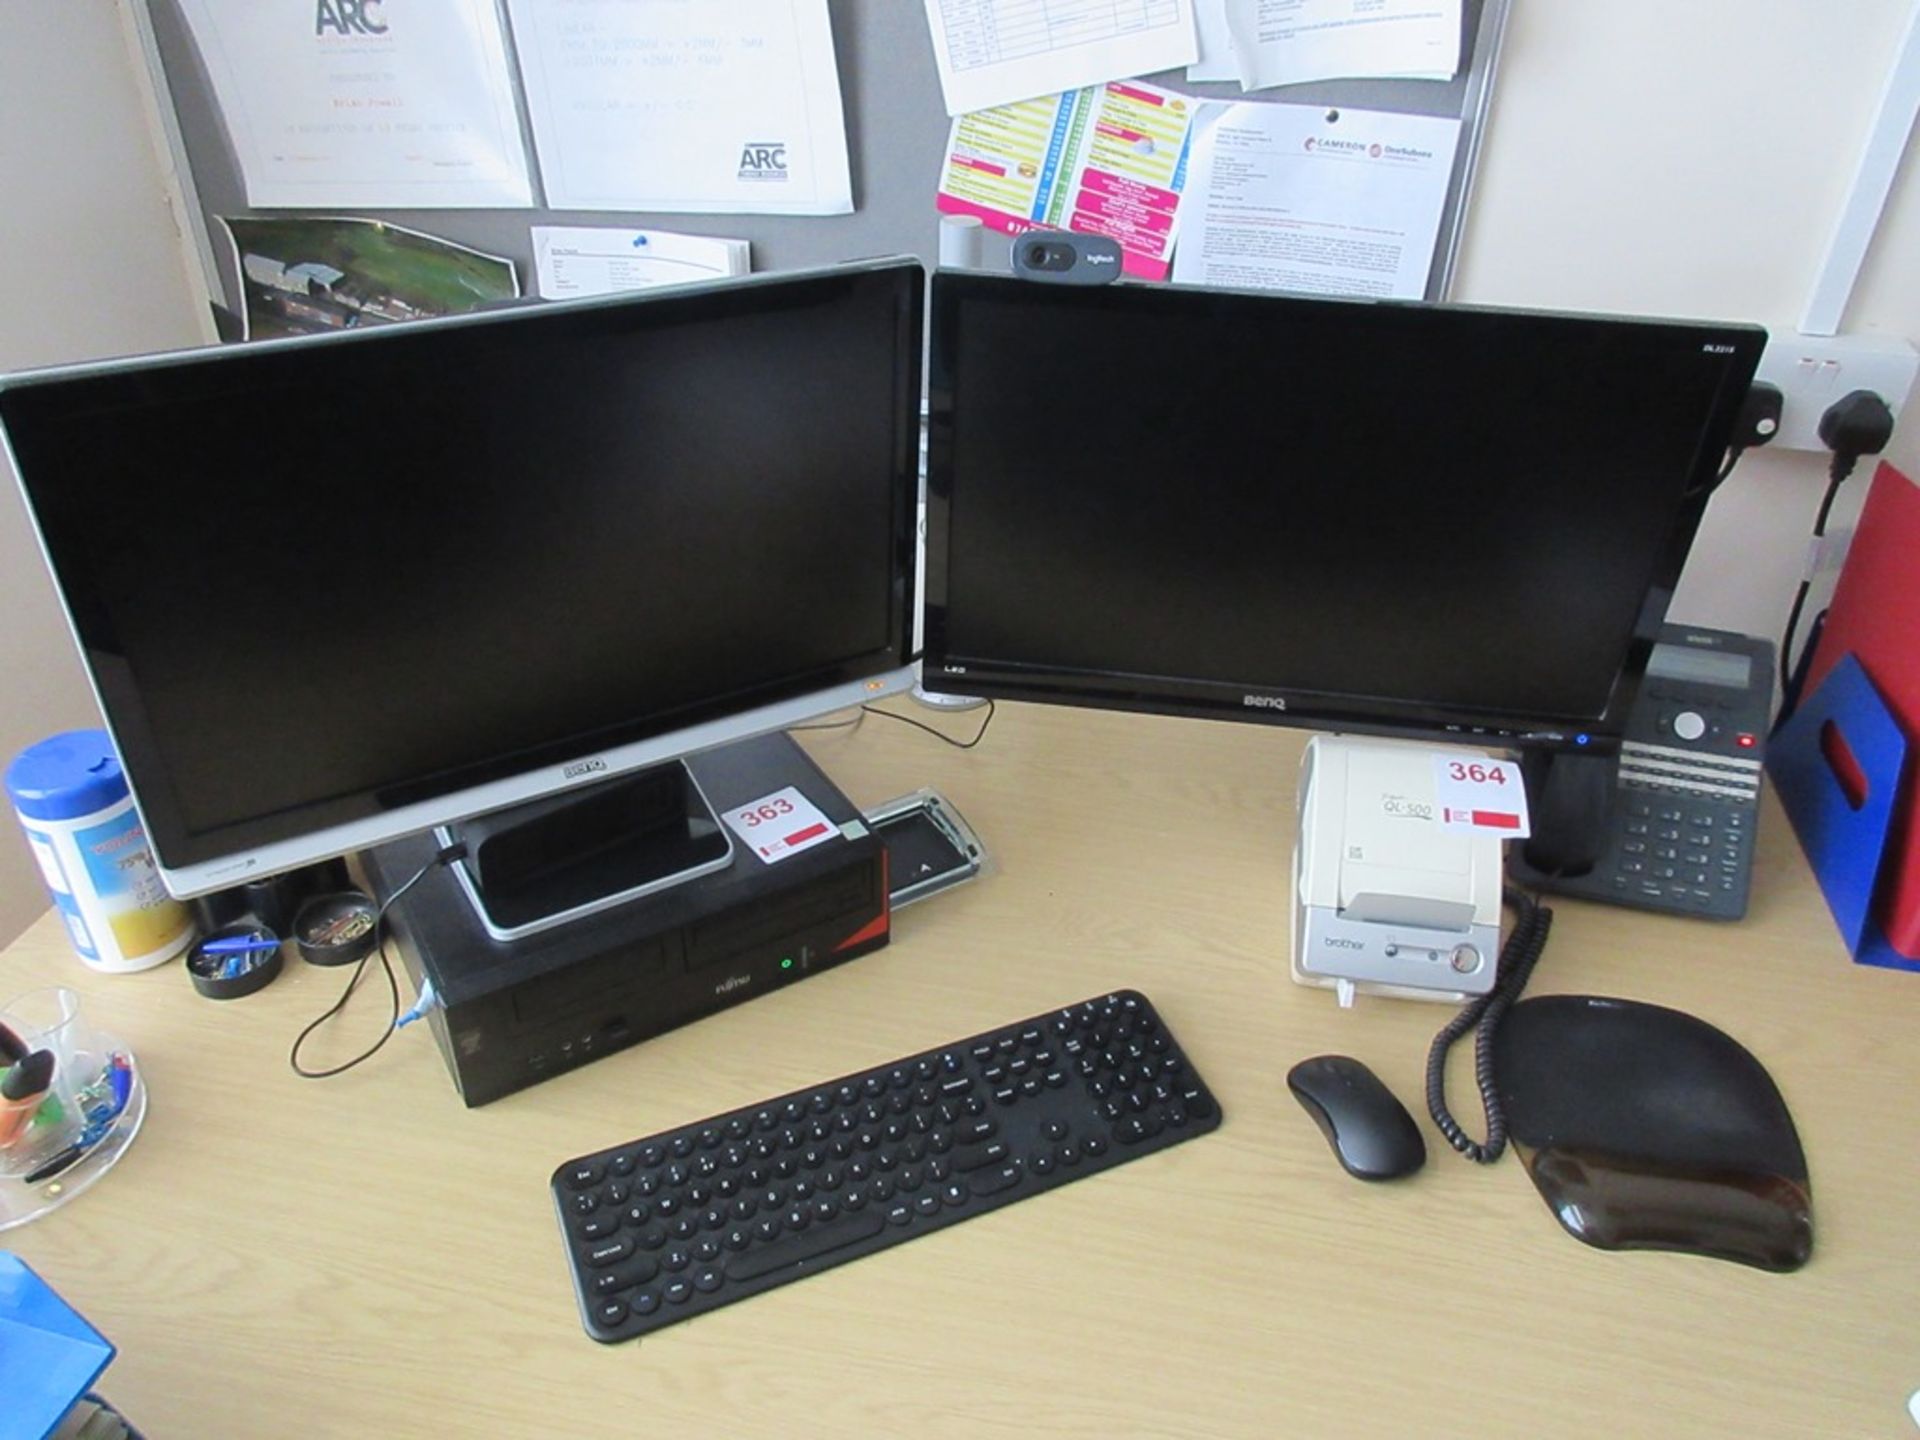 Fujitsu Core i5 computer system, with 2 x Benq flatscreen monitors